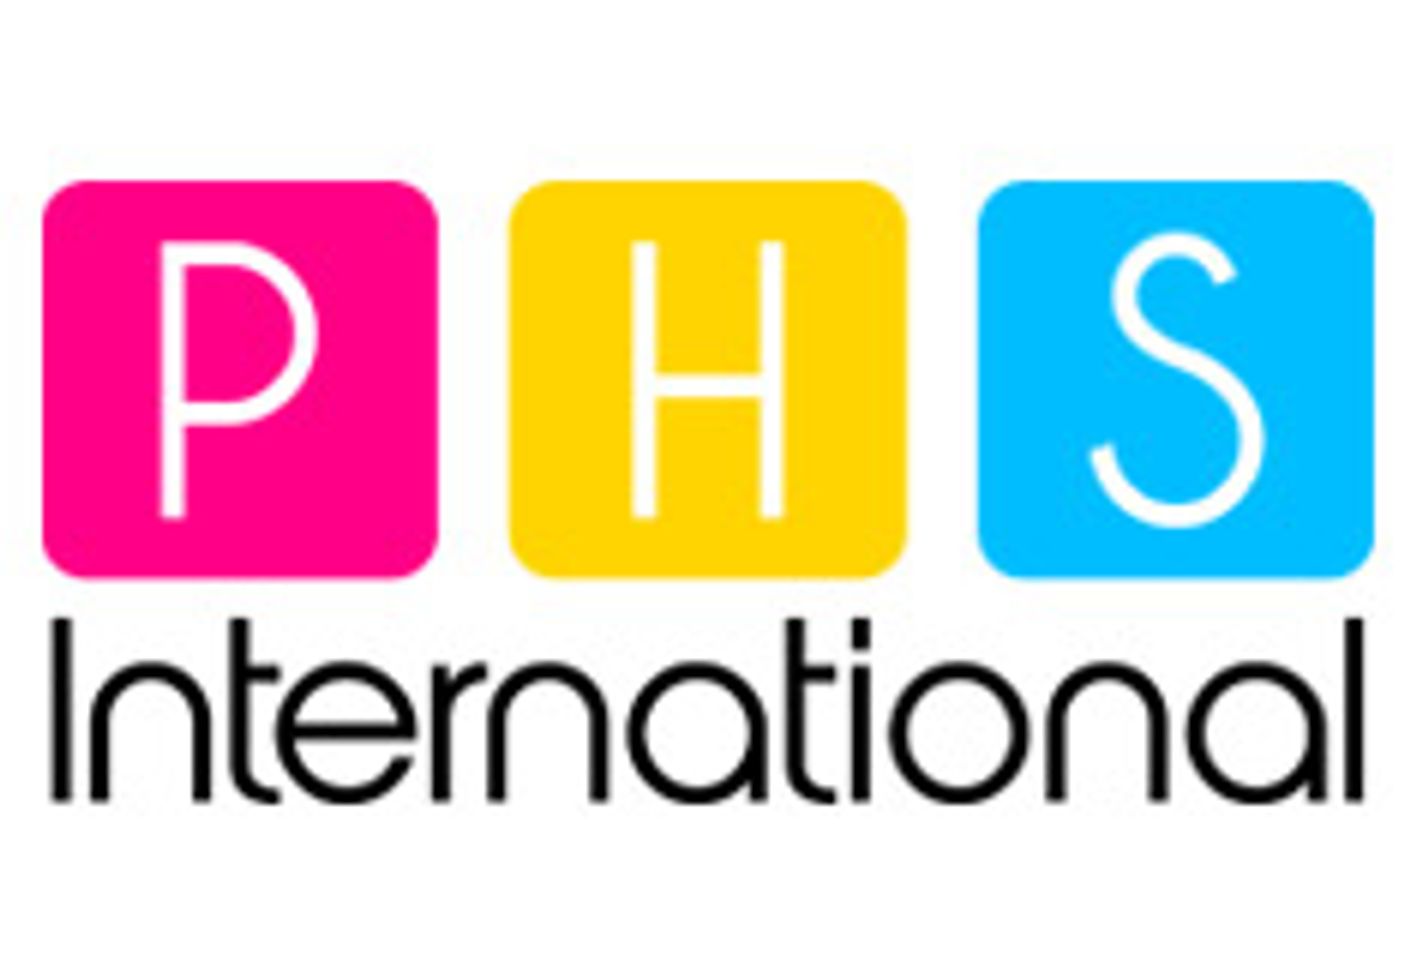 PHS International Honored With StorErotica Award Nomination